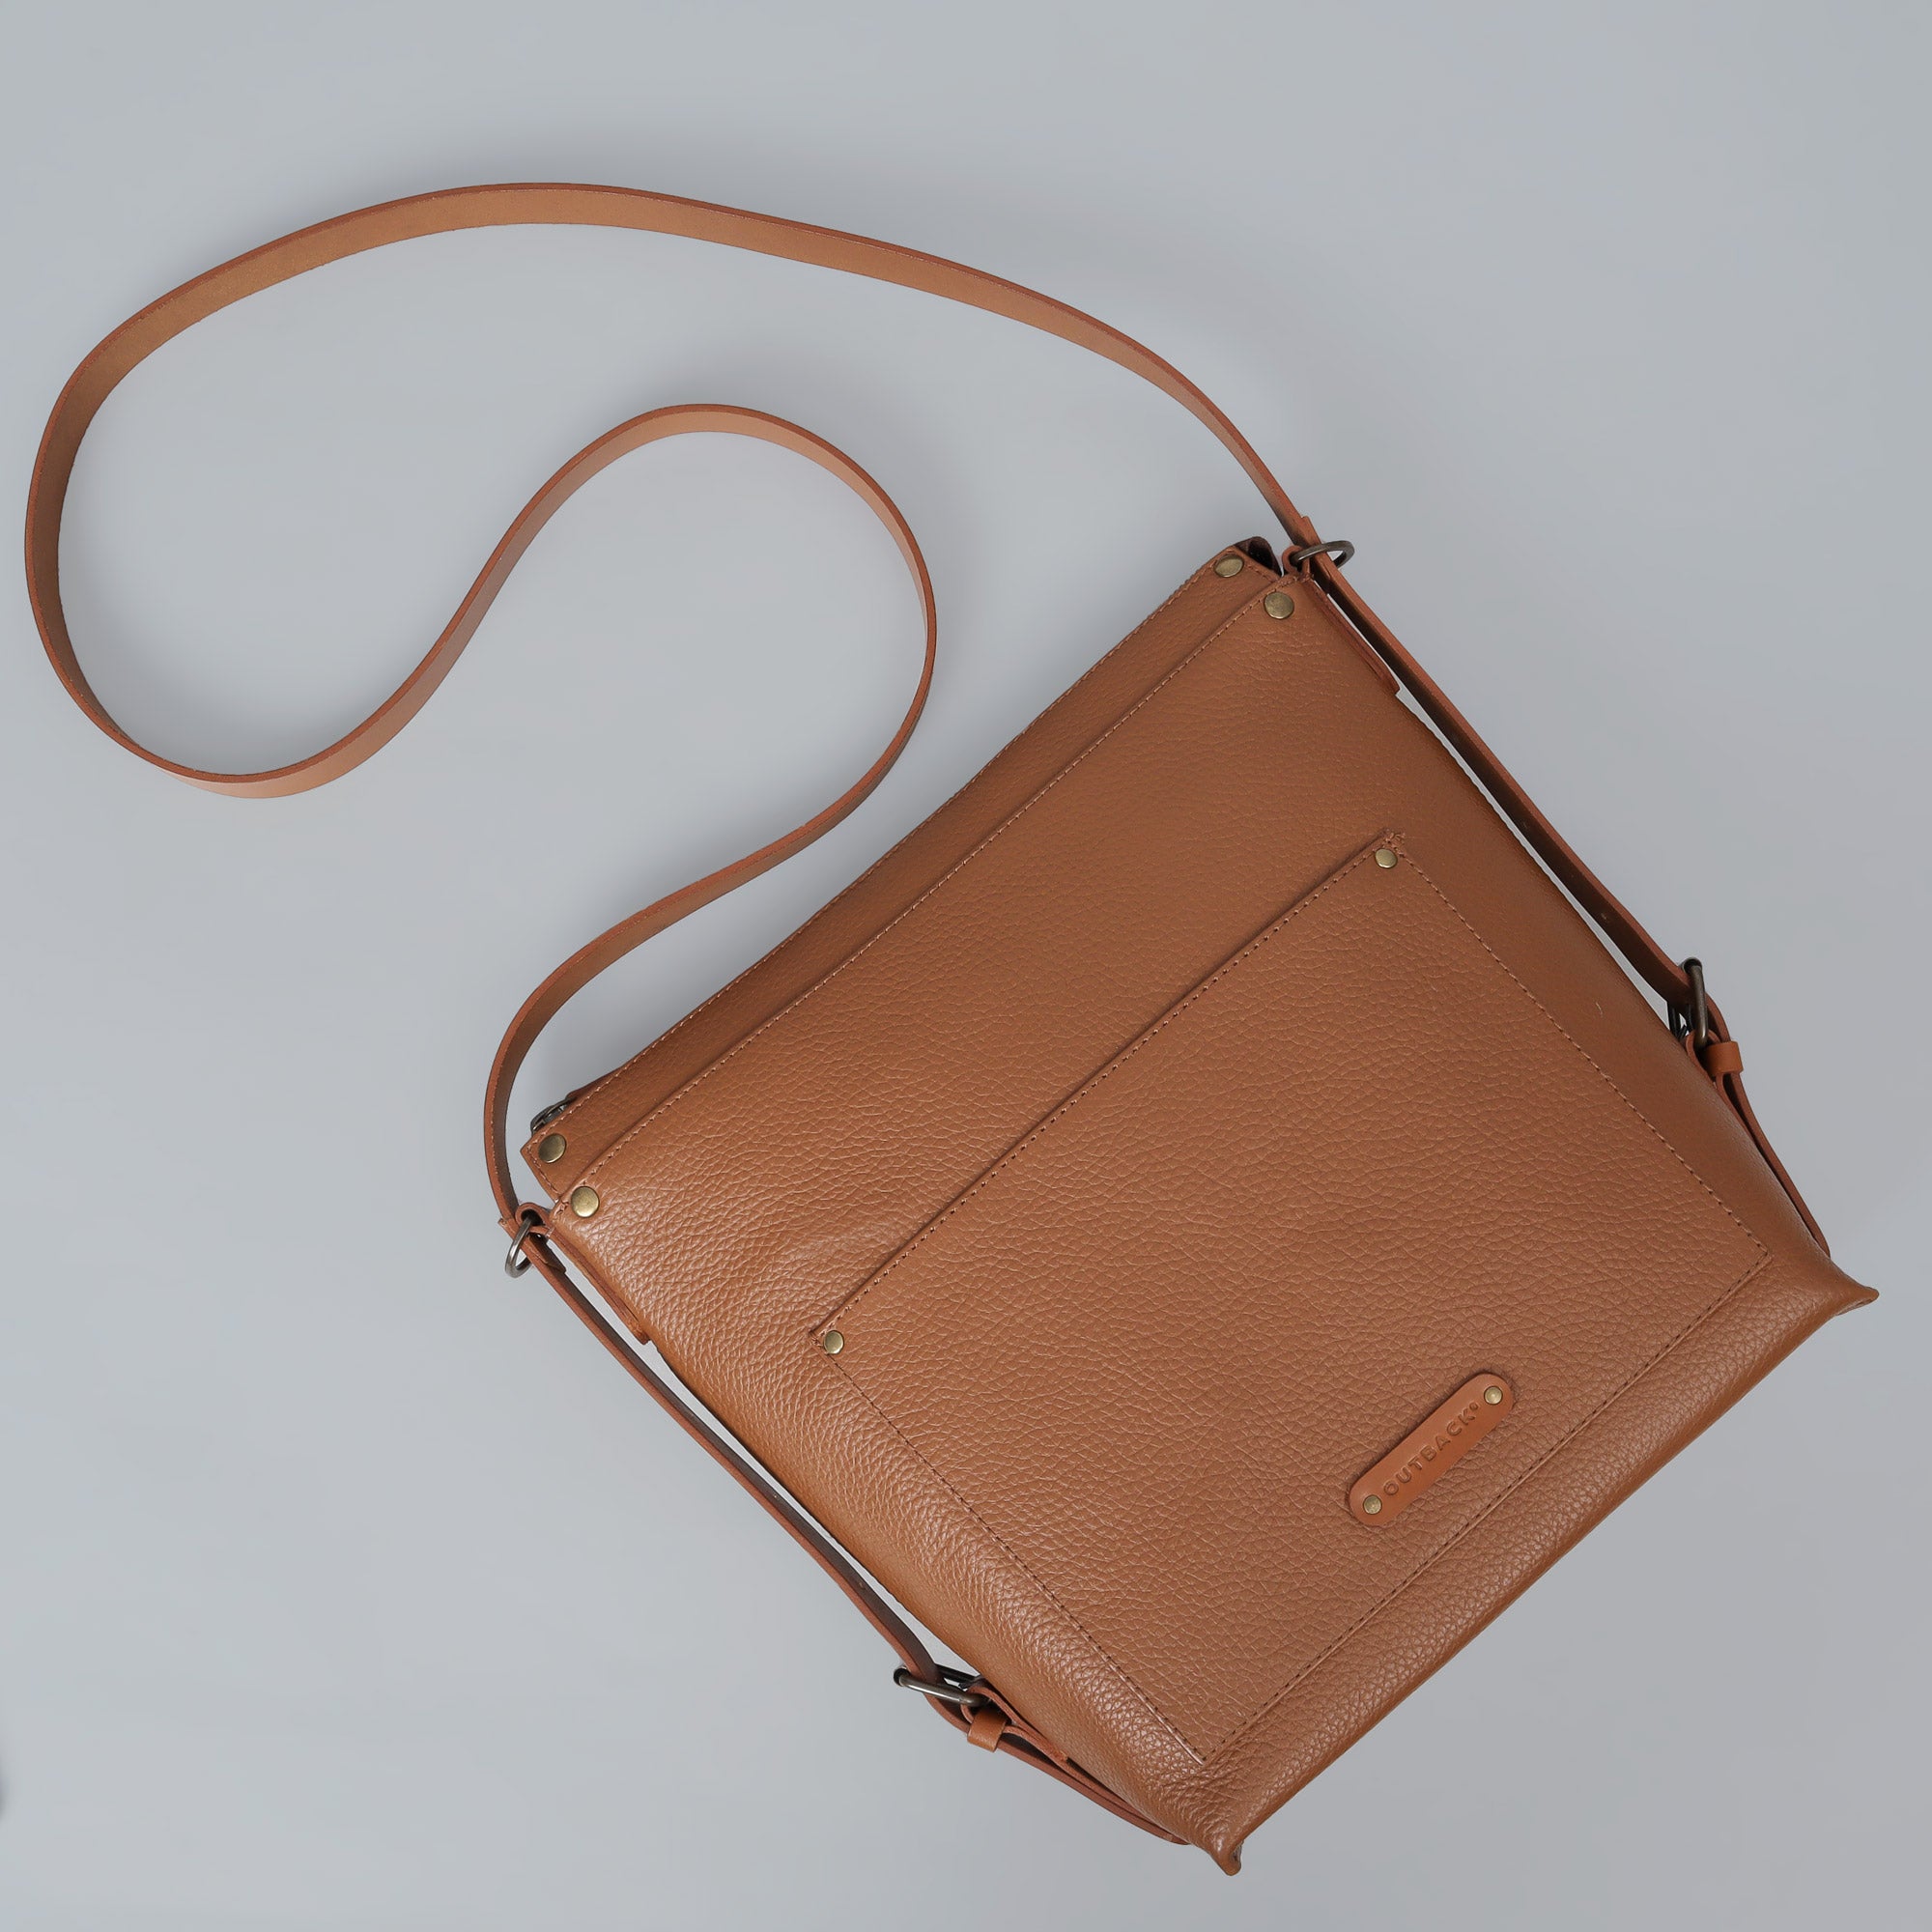 Stylish leather crossbody bag